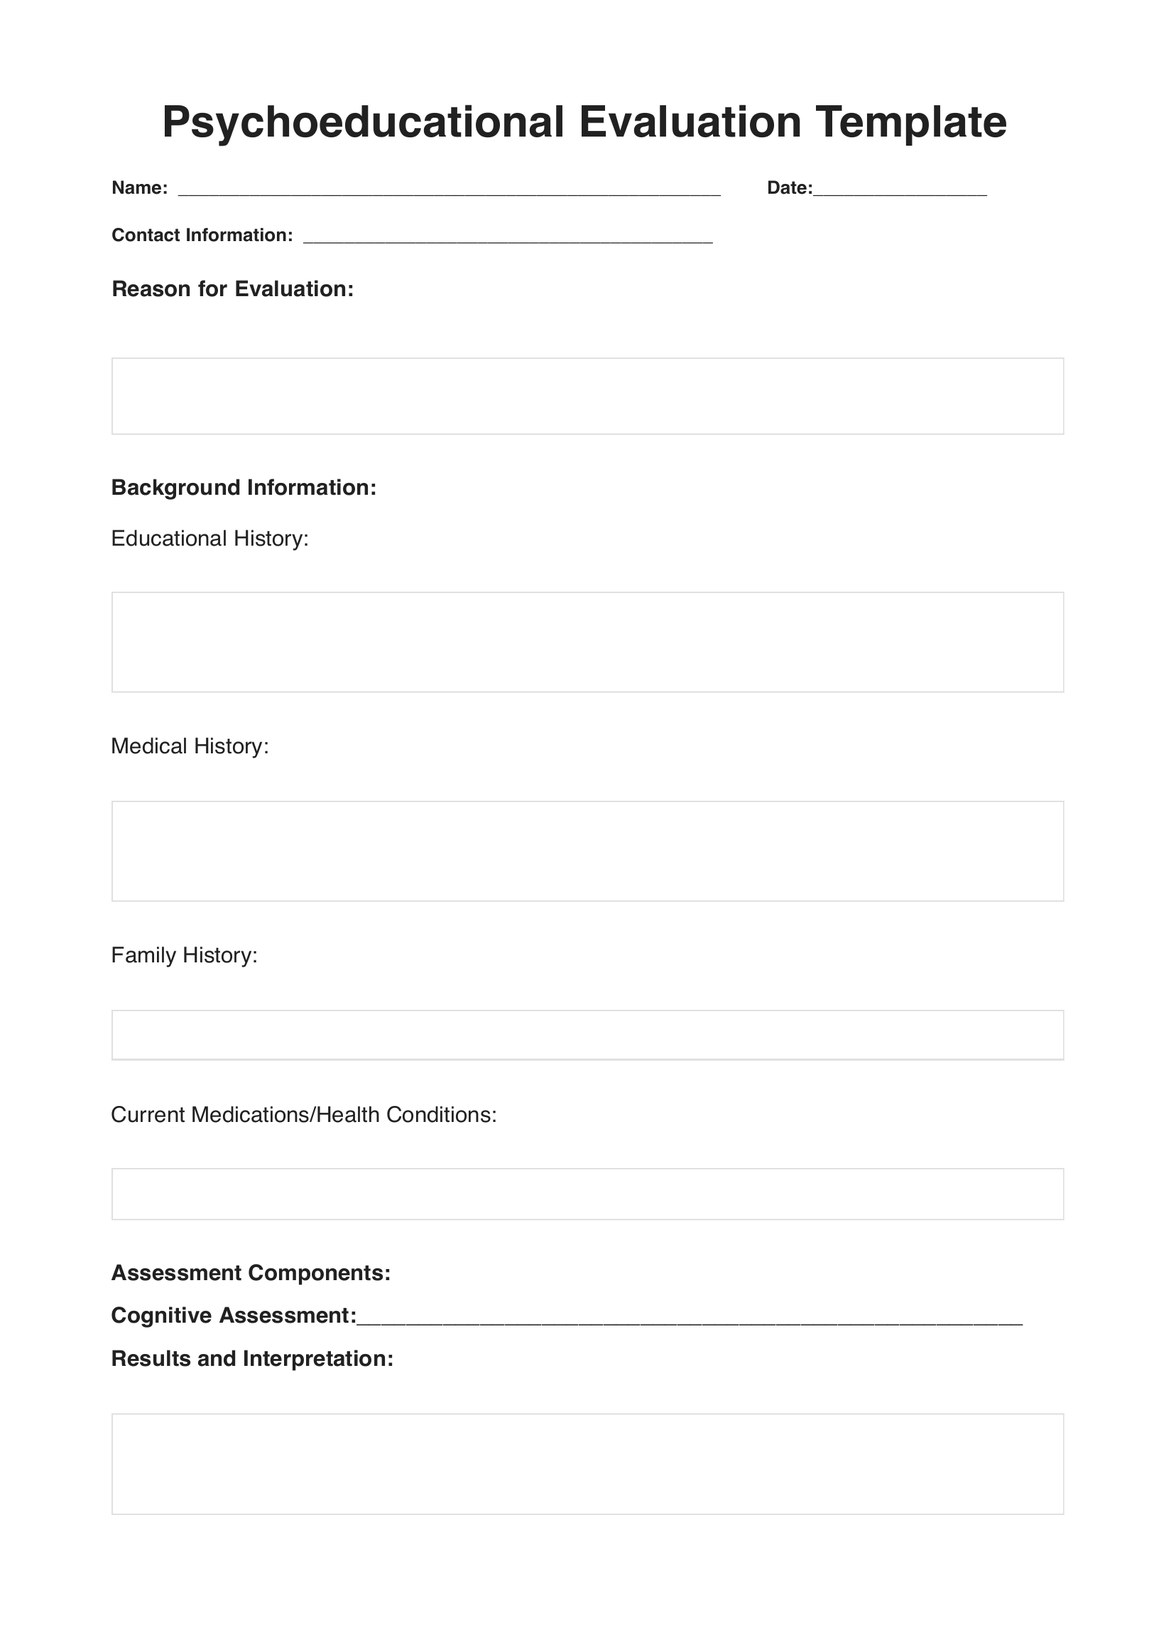 Psychoeducational Evaluations PDF Example